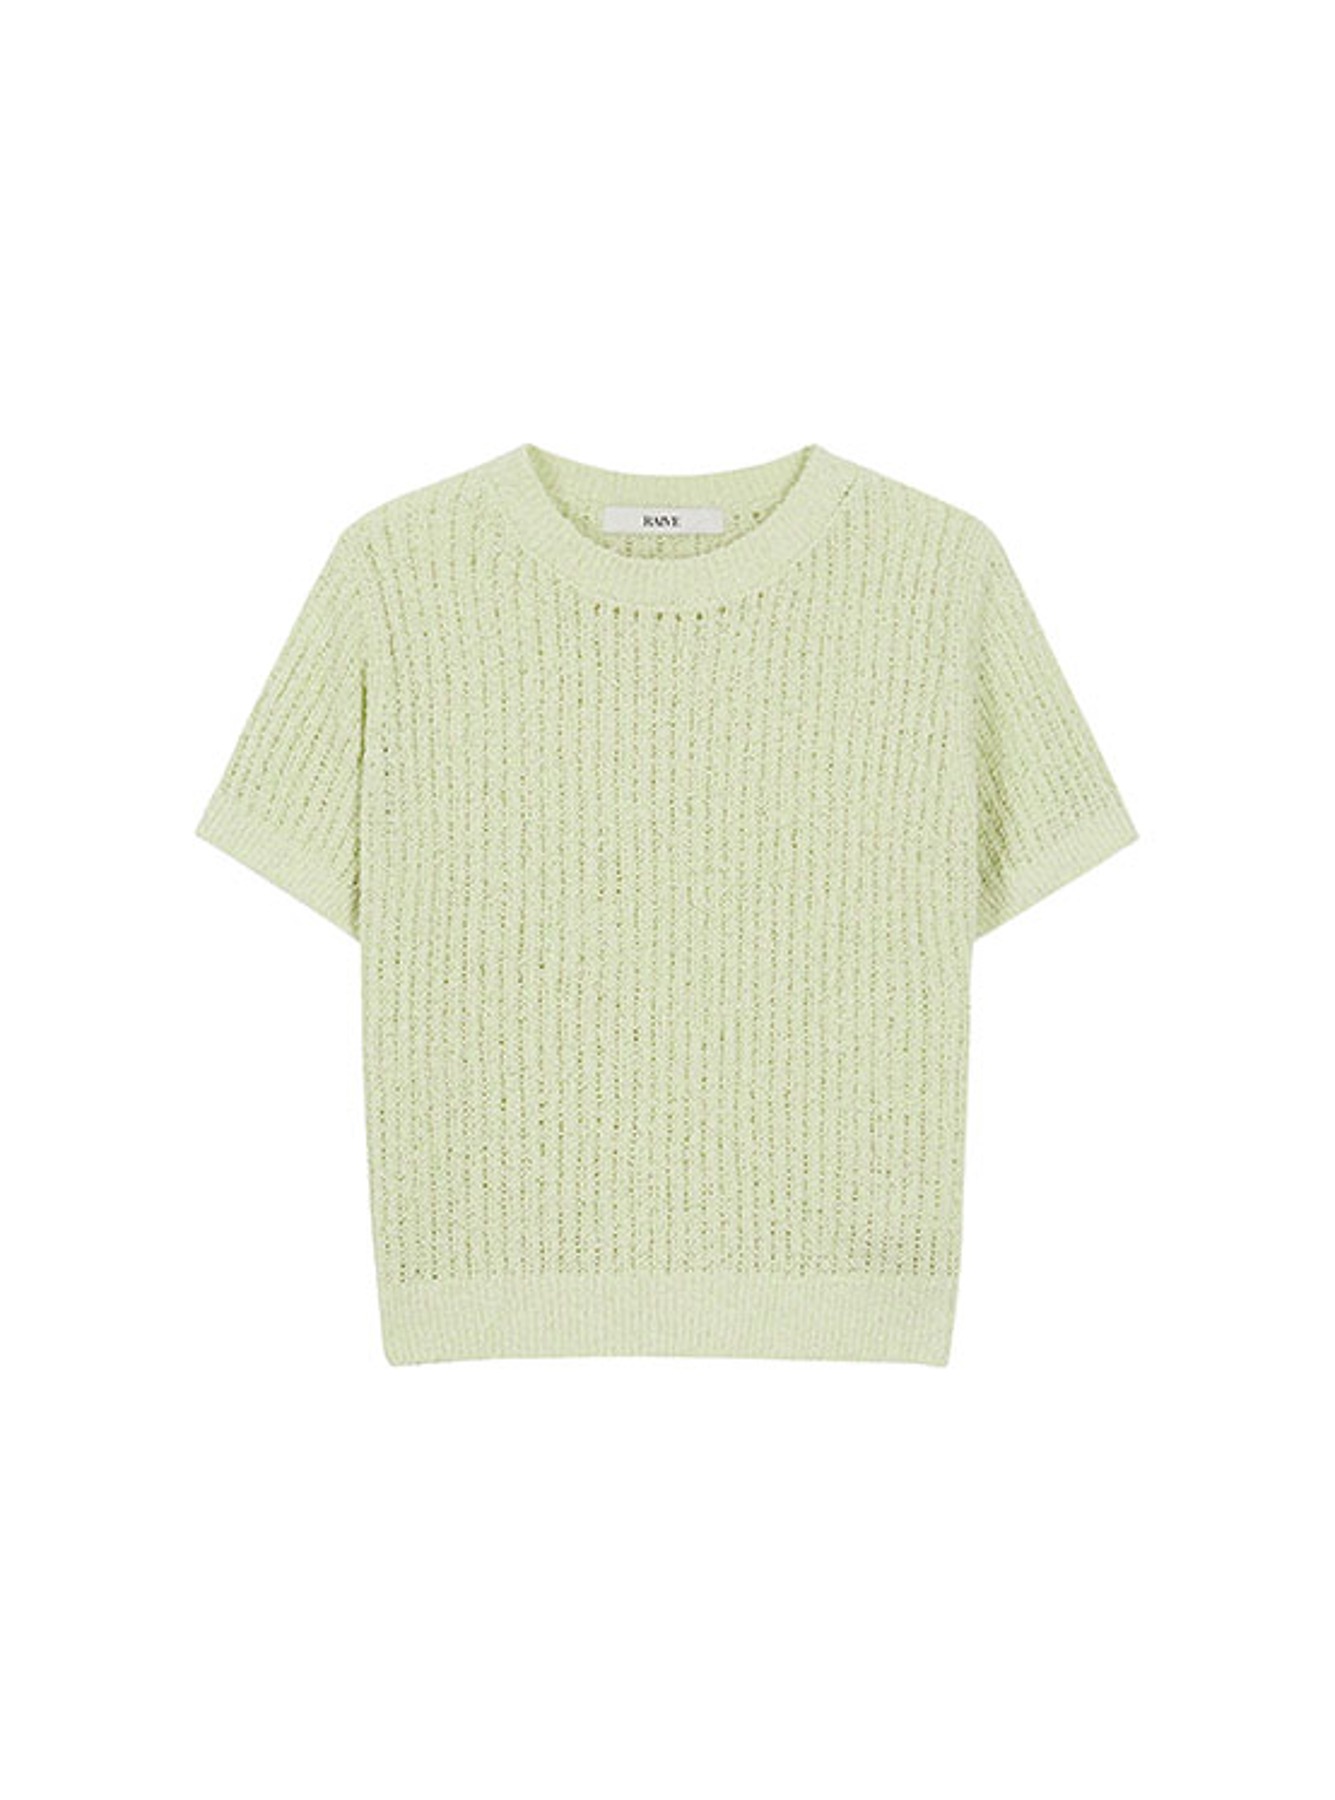 Basic Knit in Y/Green VK3MP153-3E